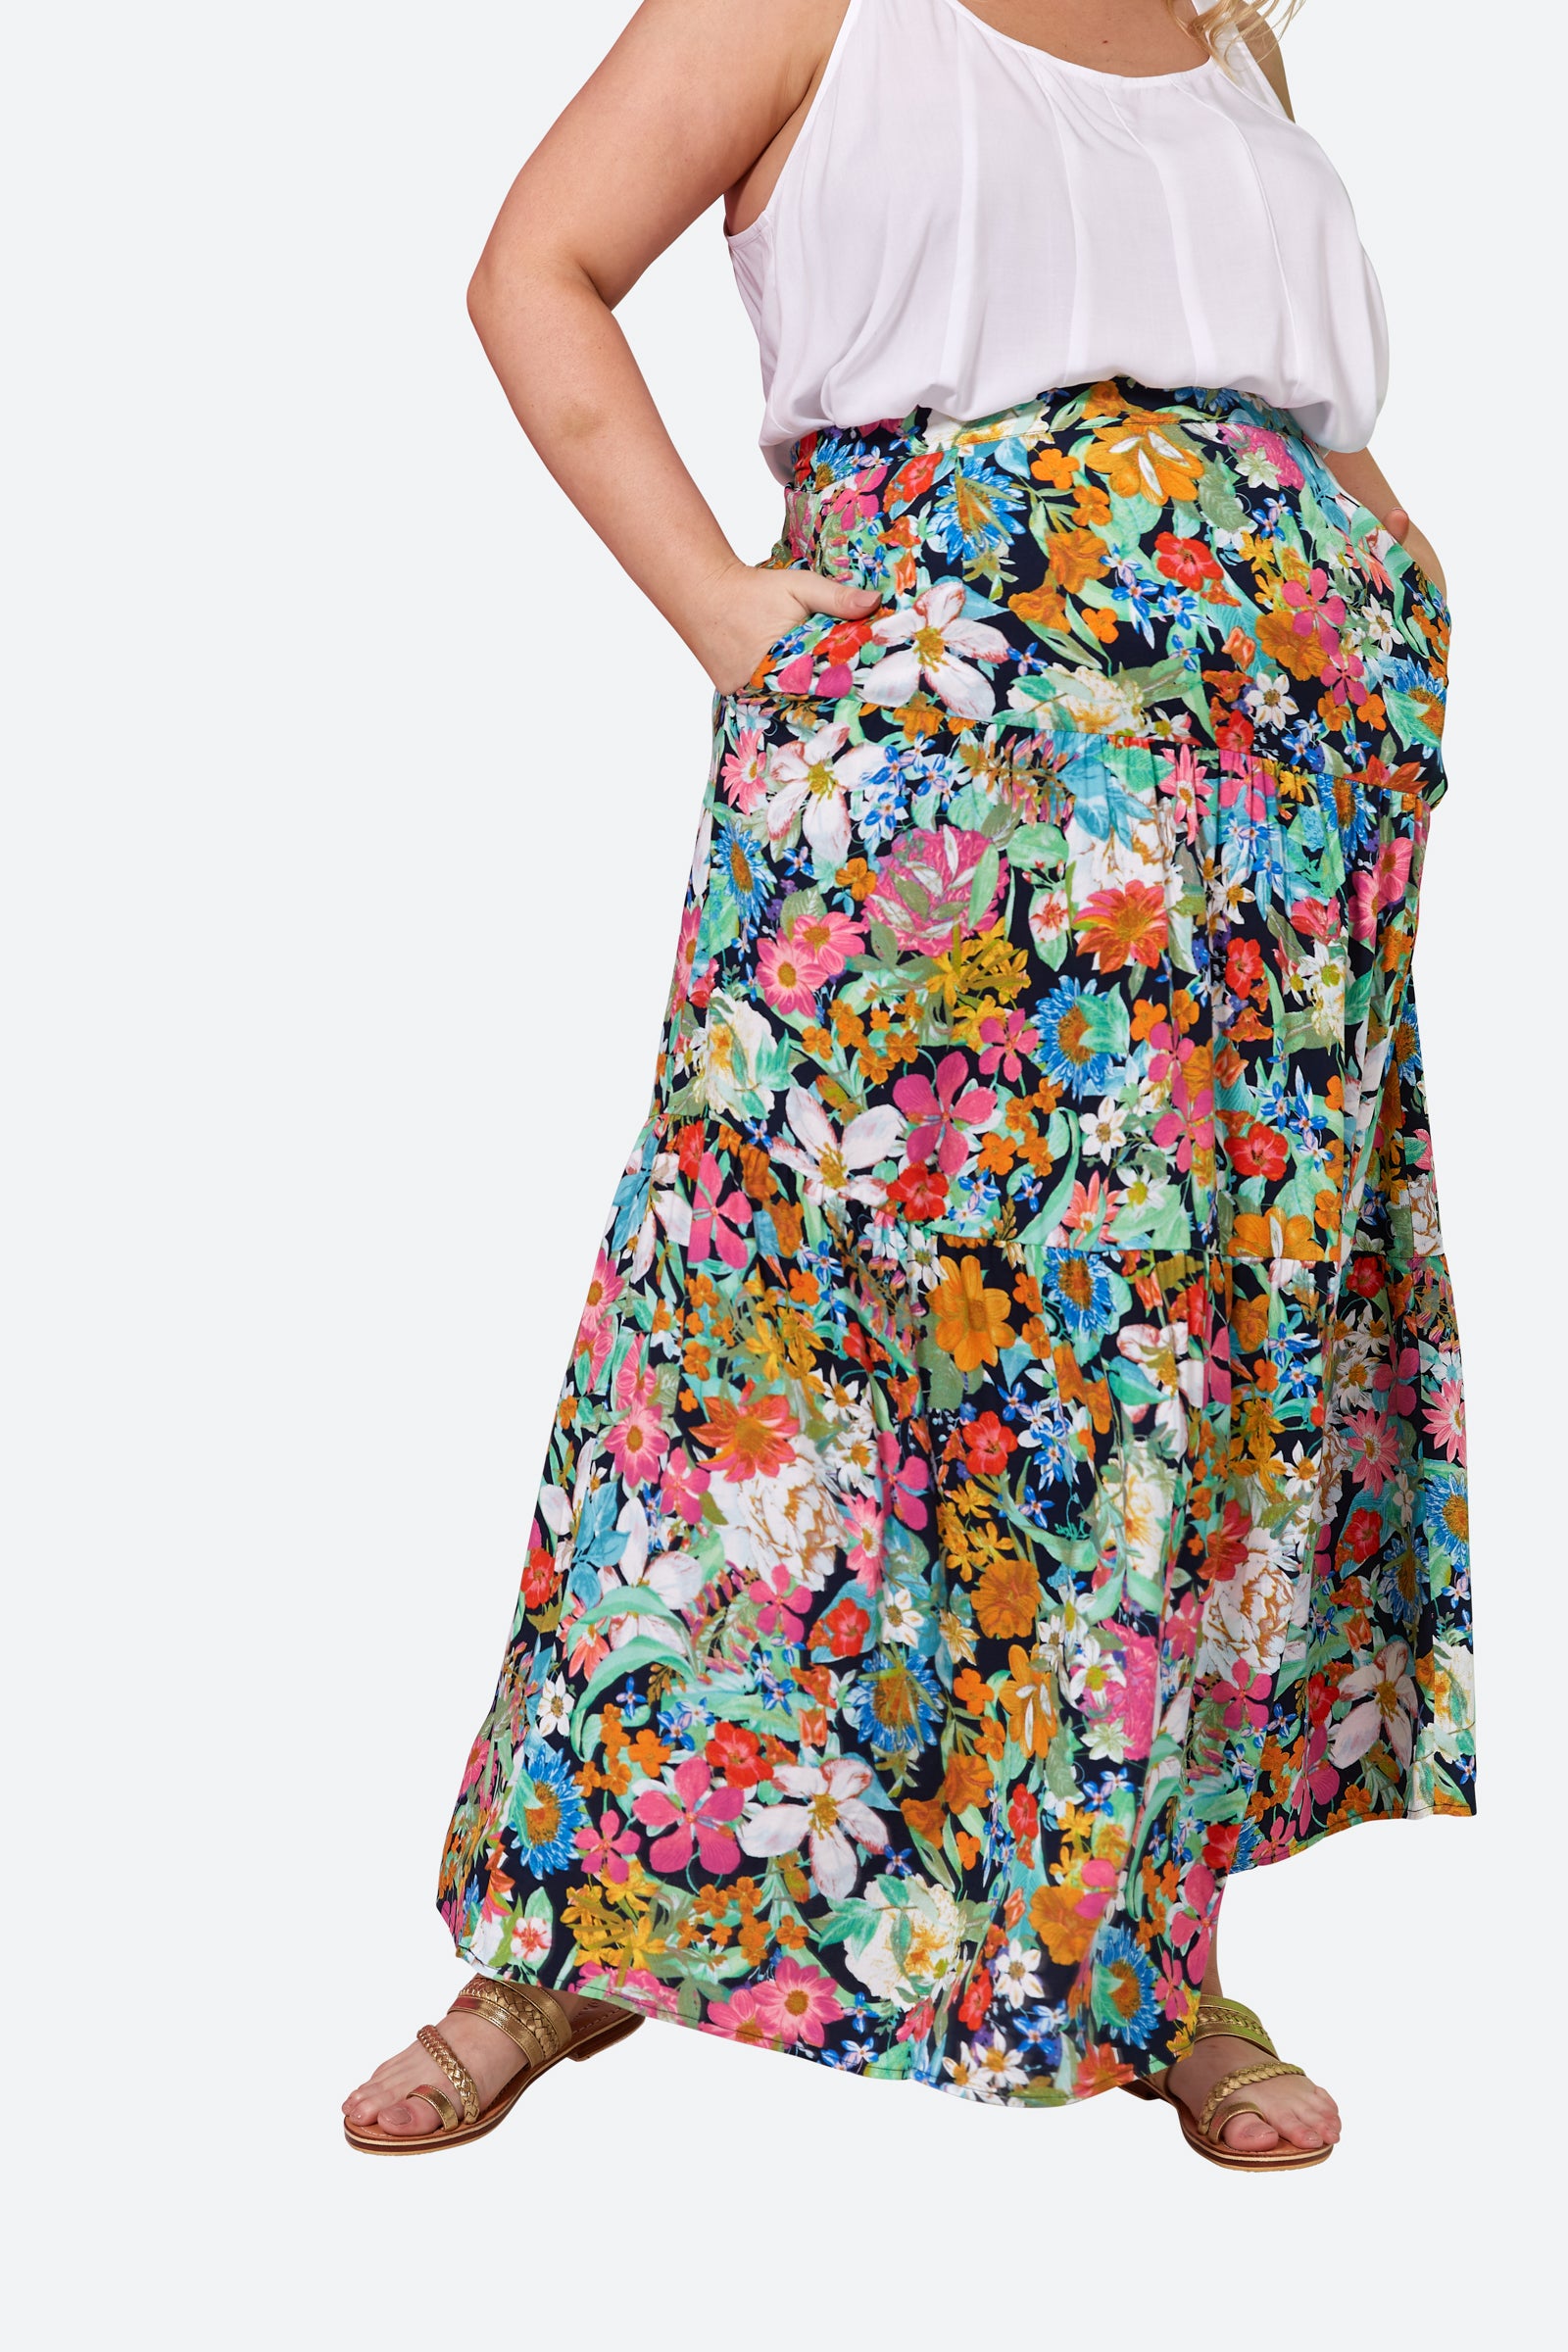 Esprit Maxi Skirt - Navy Flourish - eb&ive Clothing - Skirt Maxi